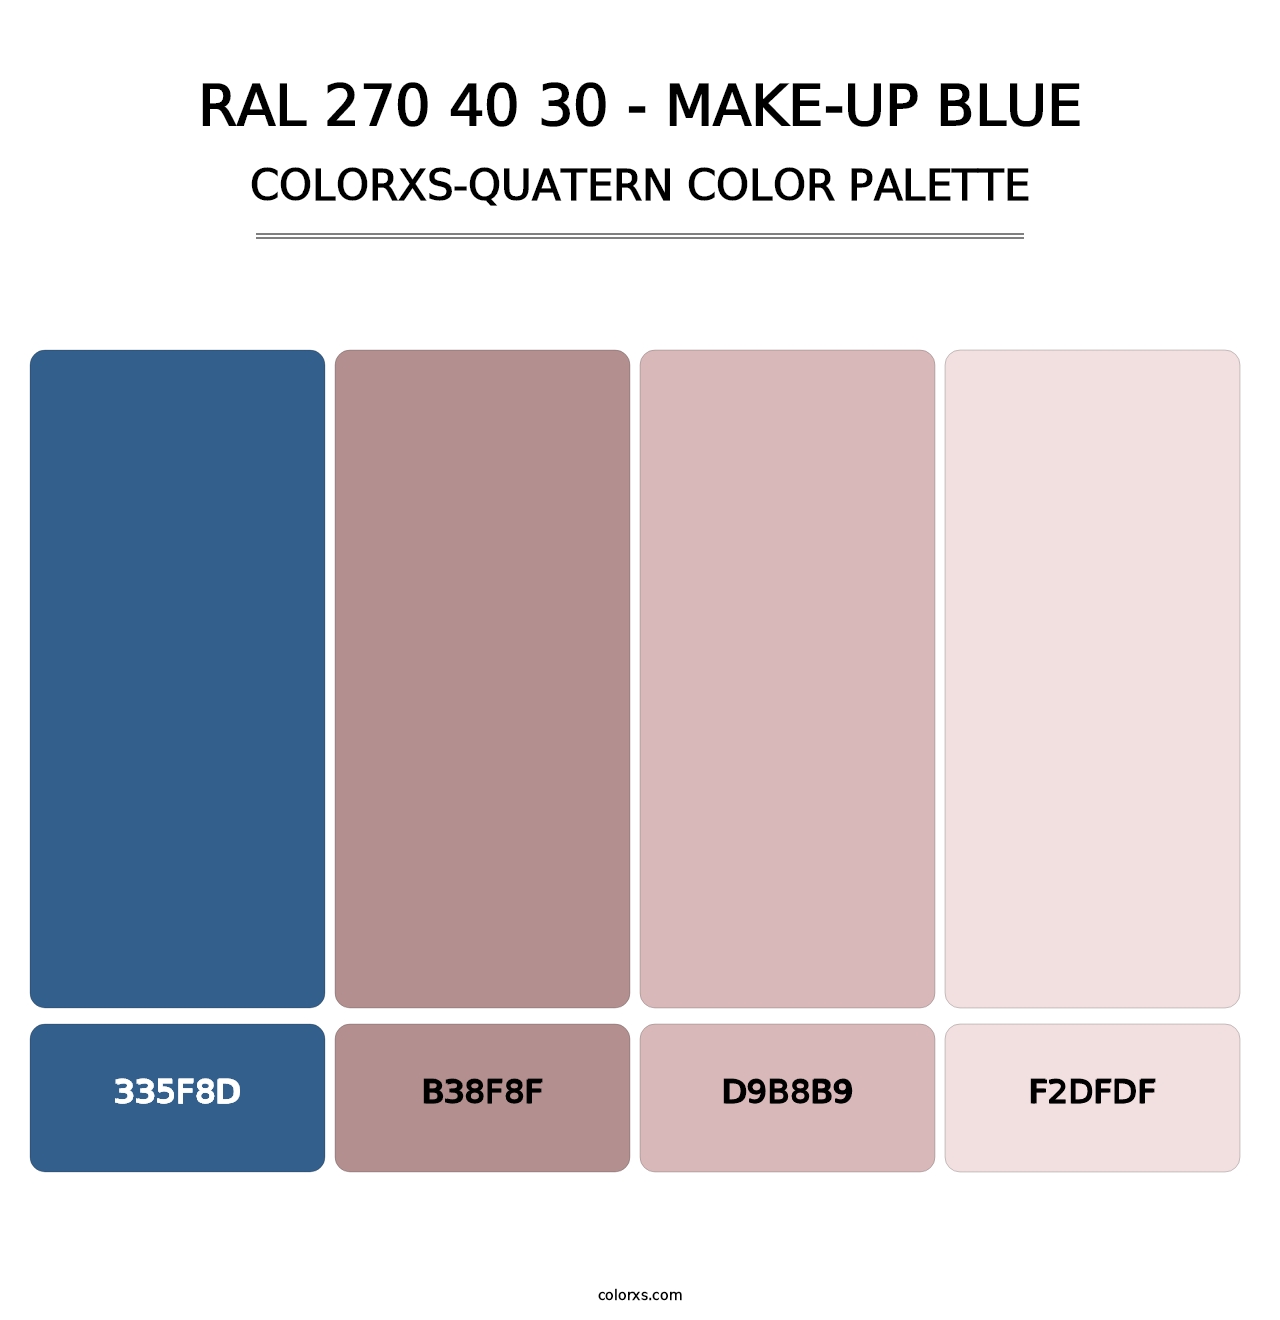 RAL 270 40 30 - Make-Up Blue - Colorxs Quatern Palette